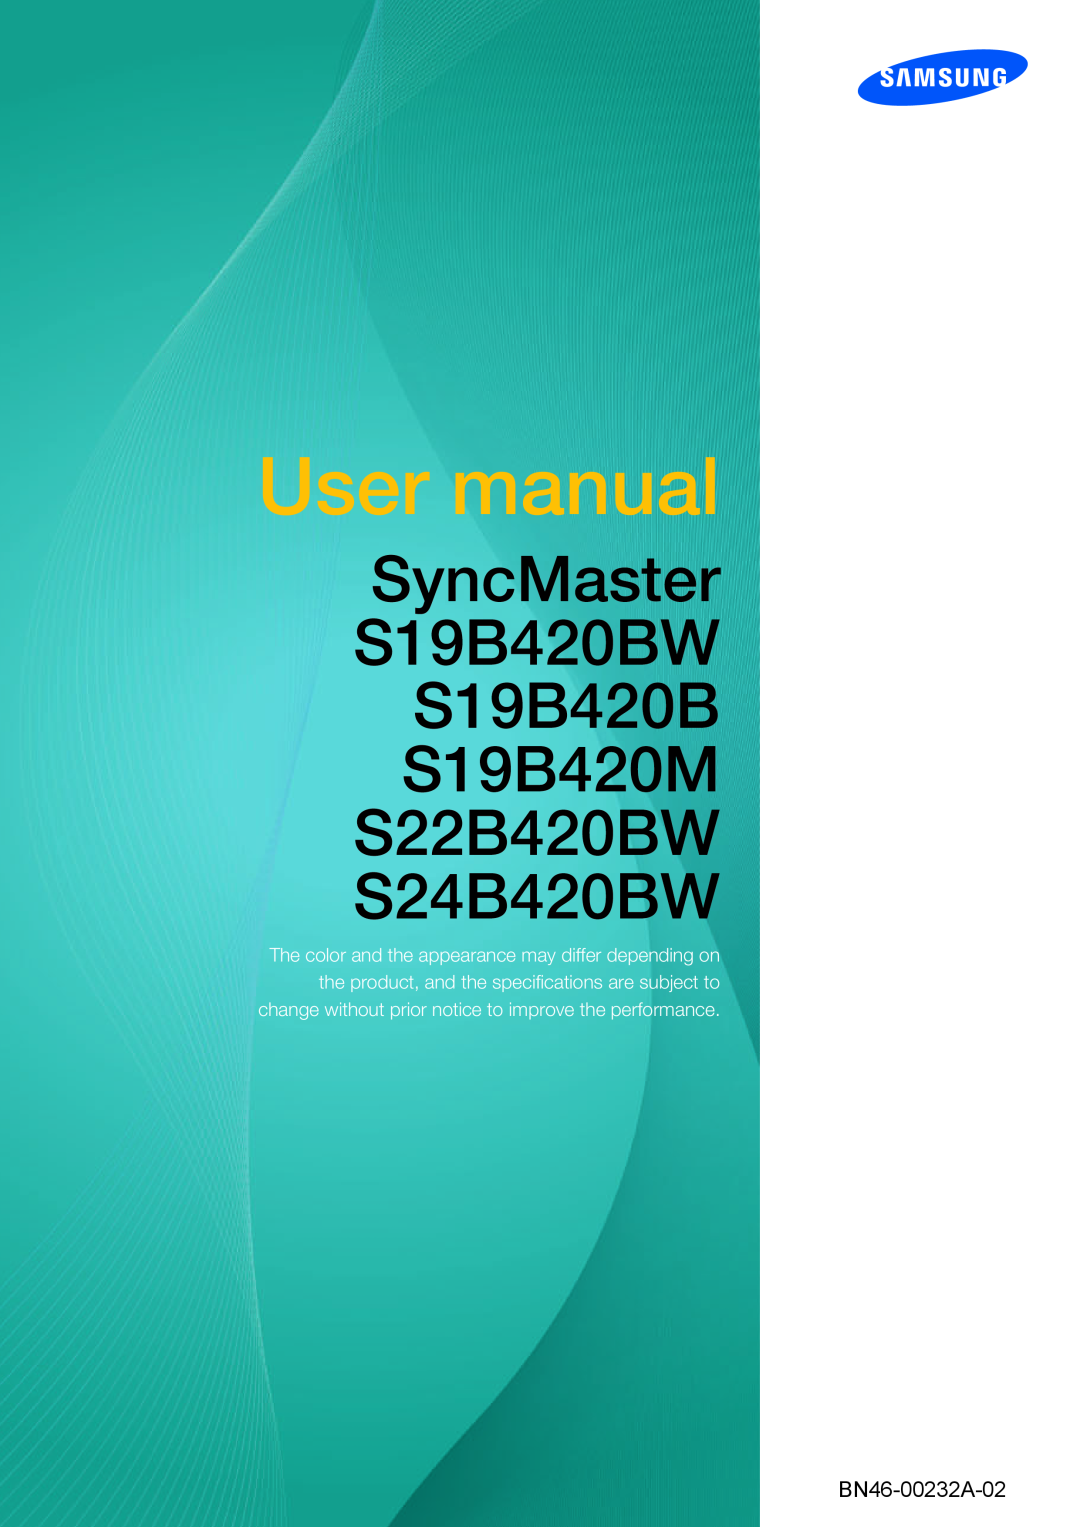 Samsung user manual User manual, SyncMaster S19B420BW S19B420B S19B420M S22B420BW S24B420BW, BN46-00232A-02 